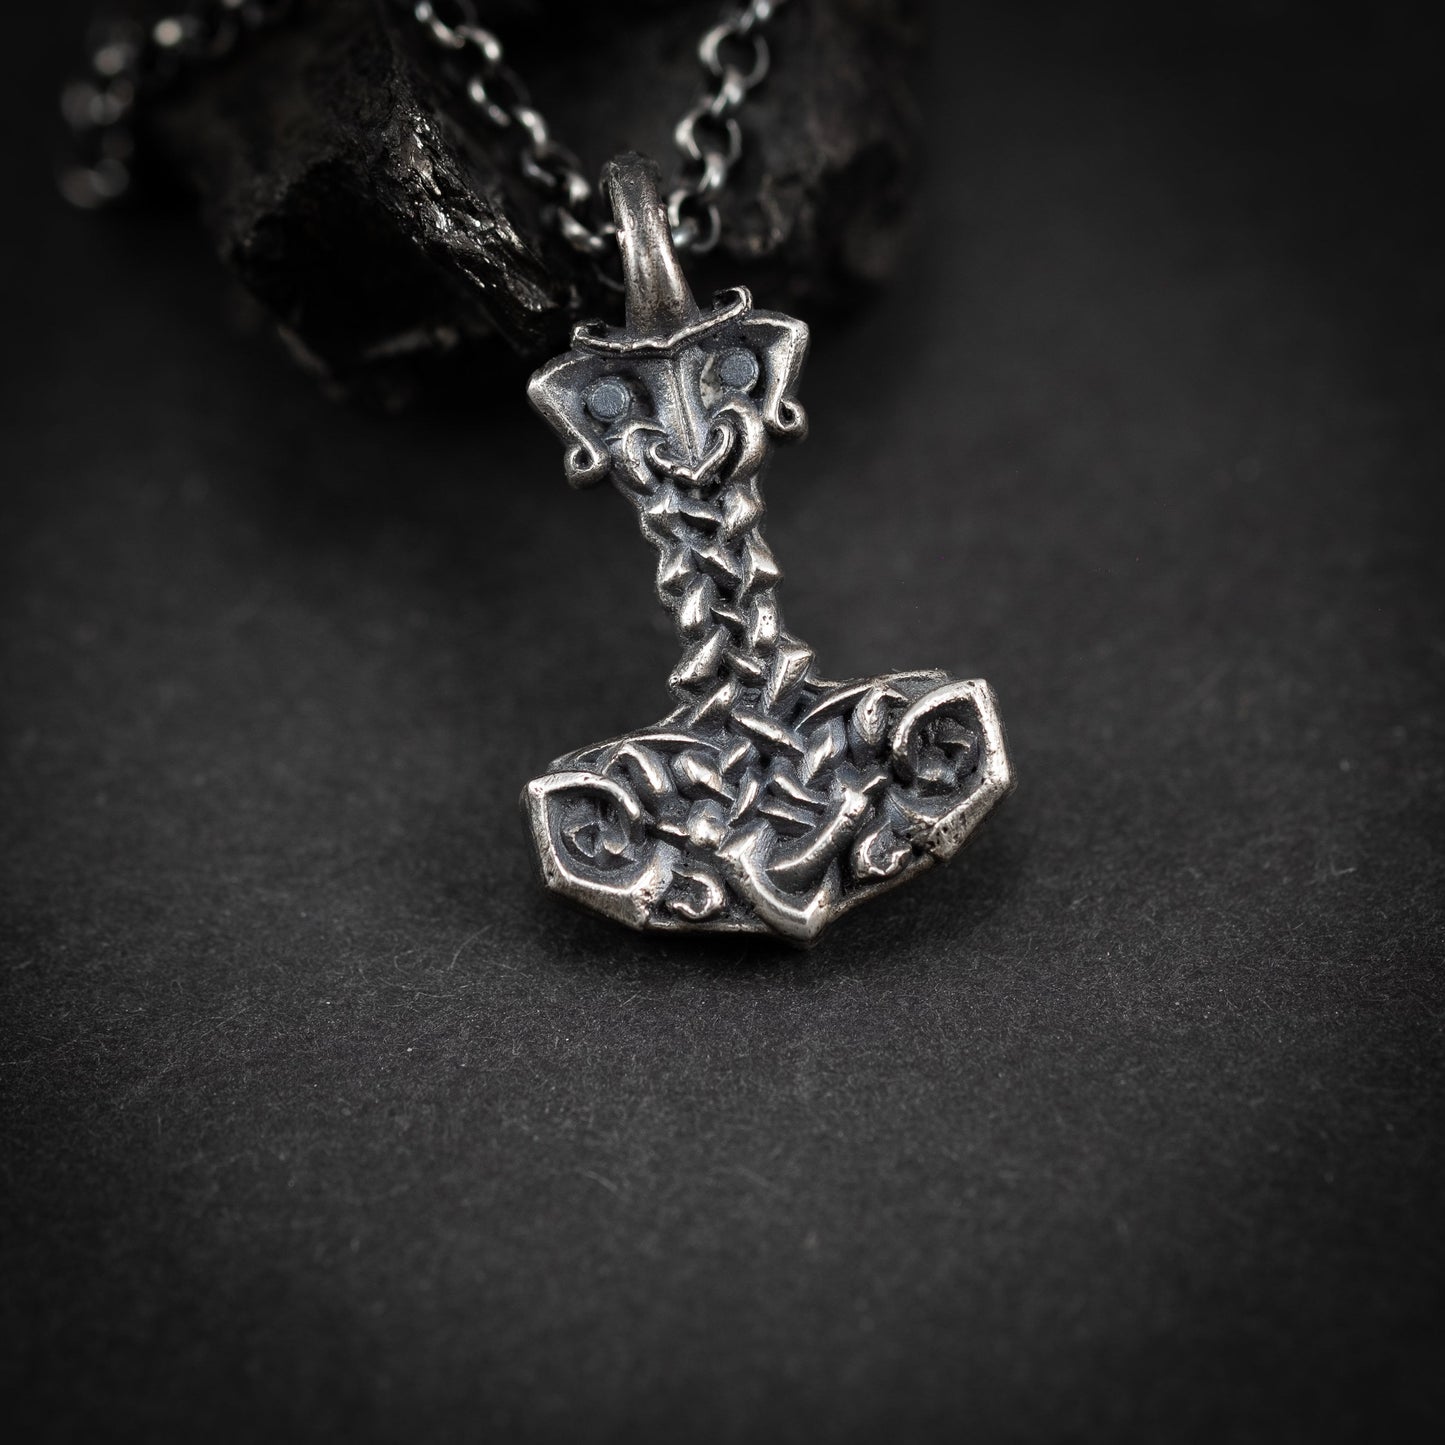 Thor's hammer Silver Pendant, Viking jewelry, Mjölnir war hammer necklace, Gift for him, Boyfriend boyfriend gifts, Norse jewelry, mens gift